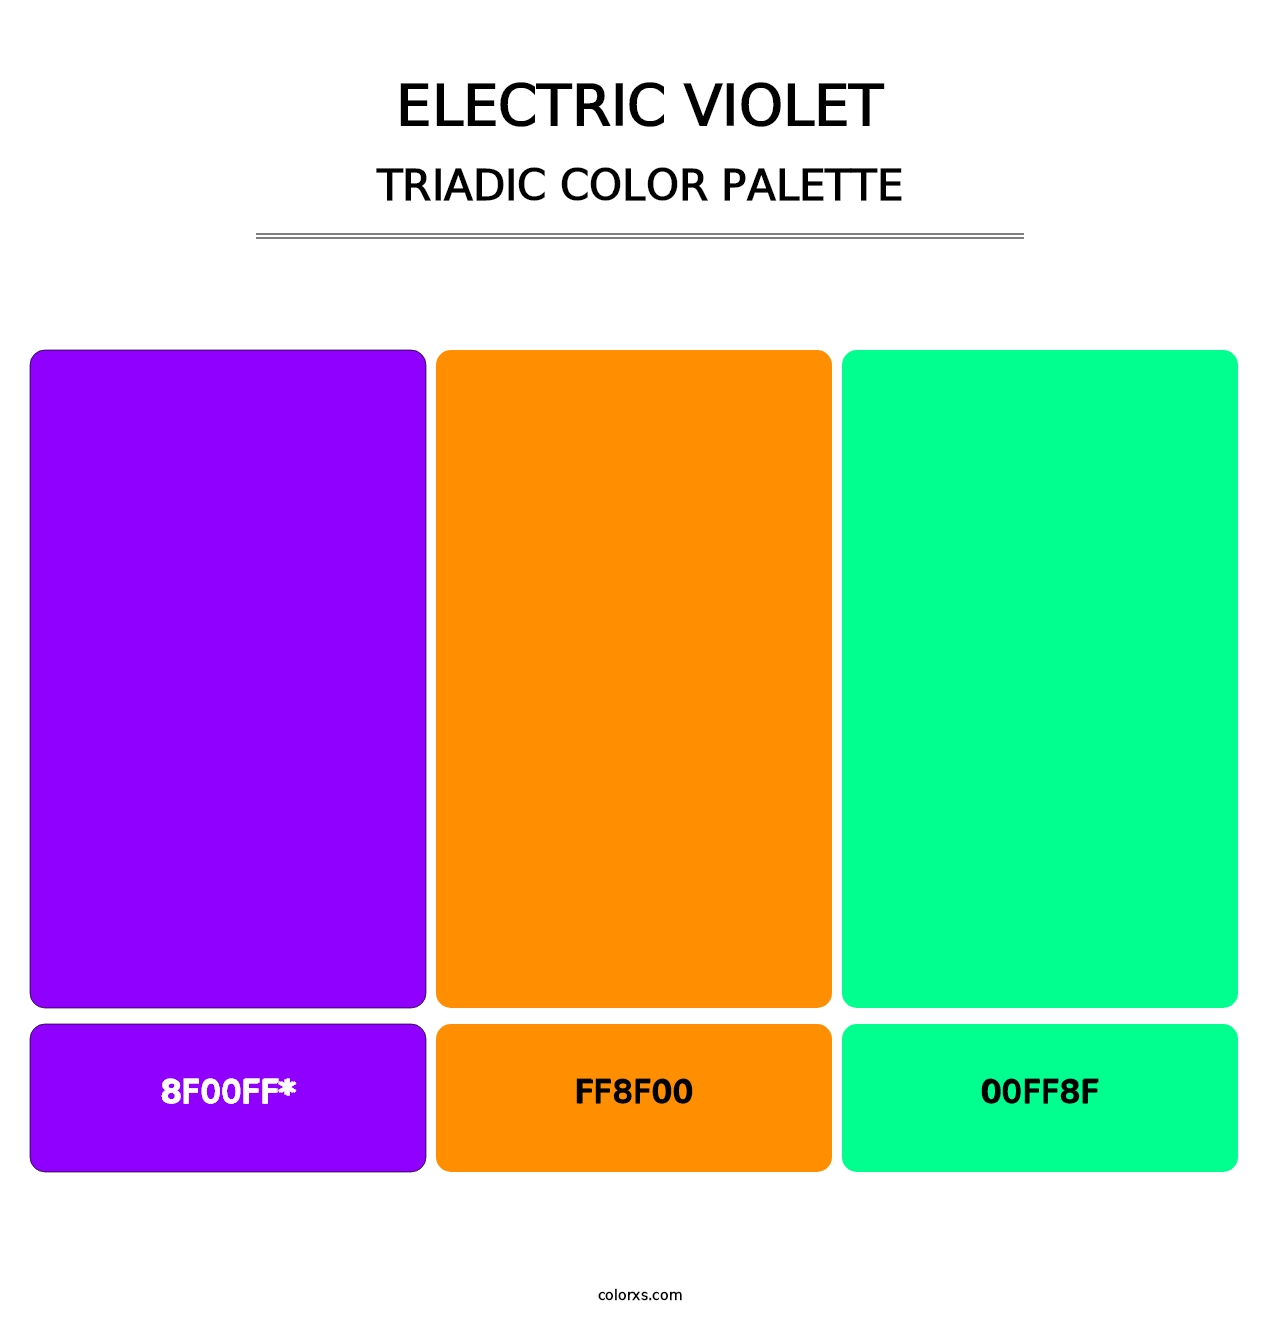 Electric Violet - Triadic Color Palette